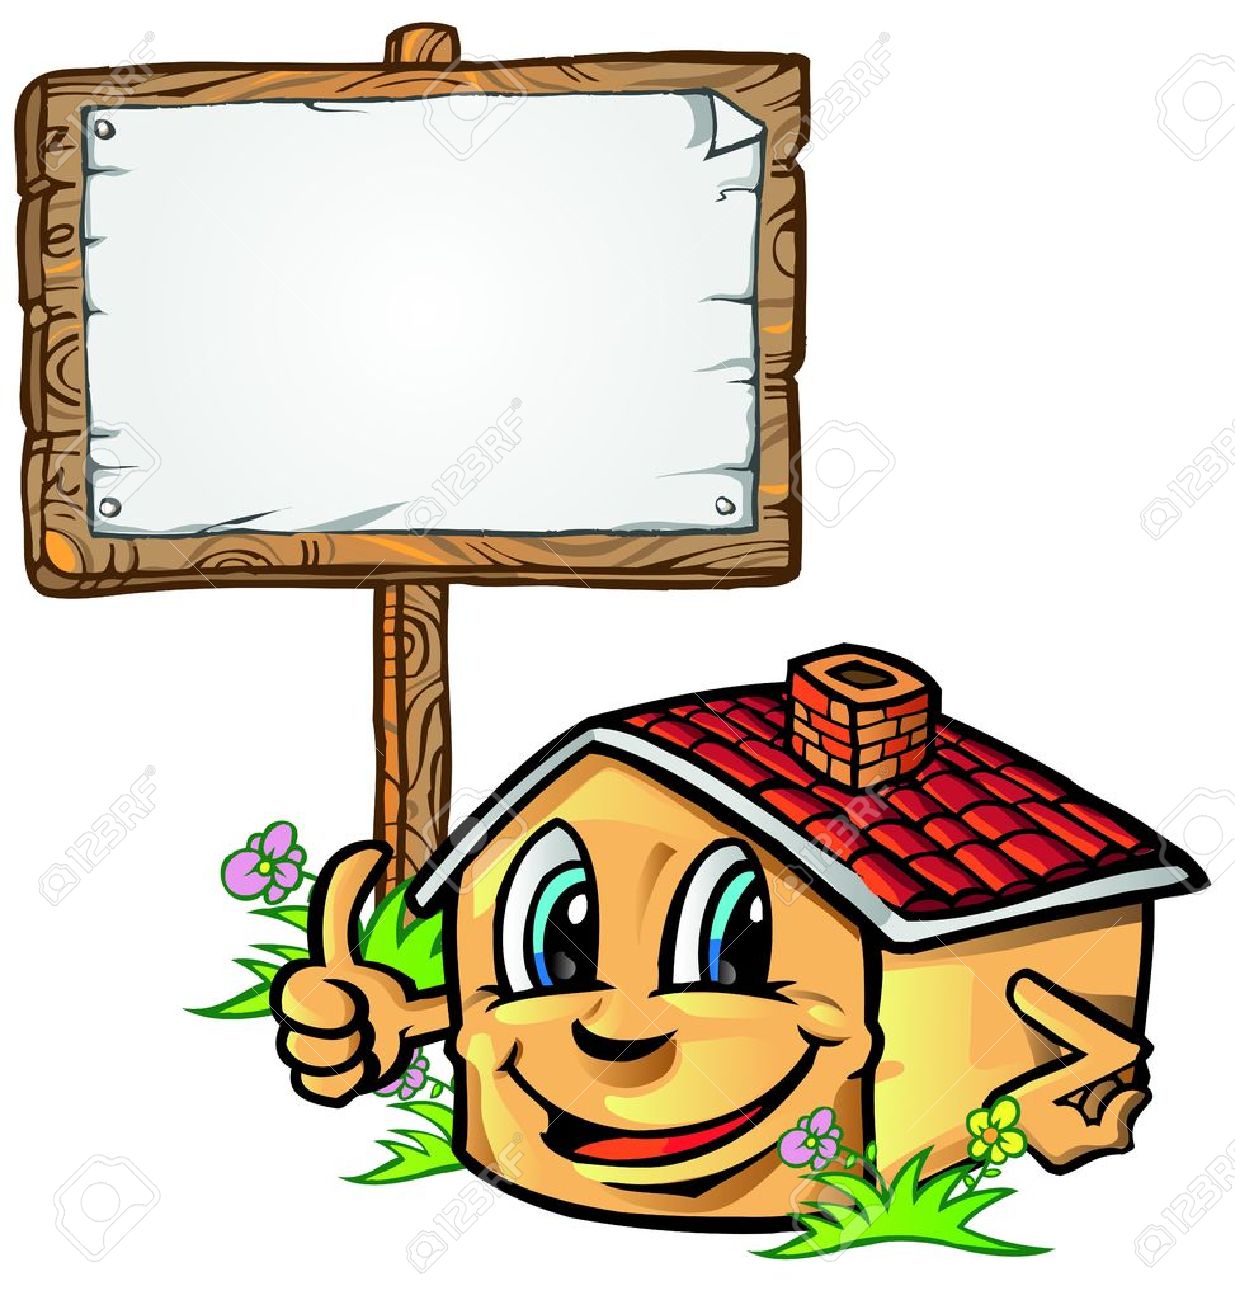 house cartoon with signboard Stock Vector - 18711506